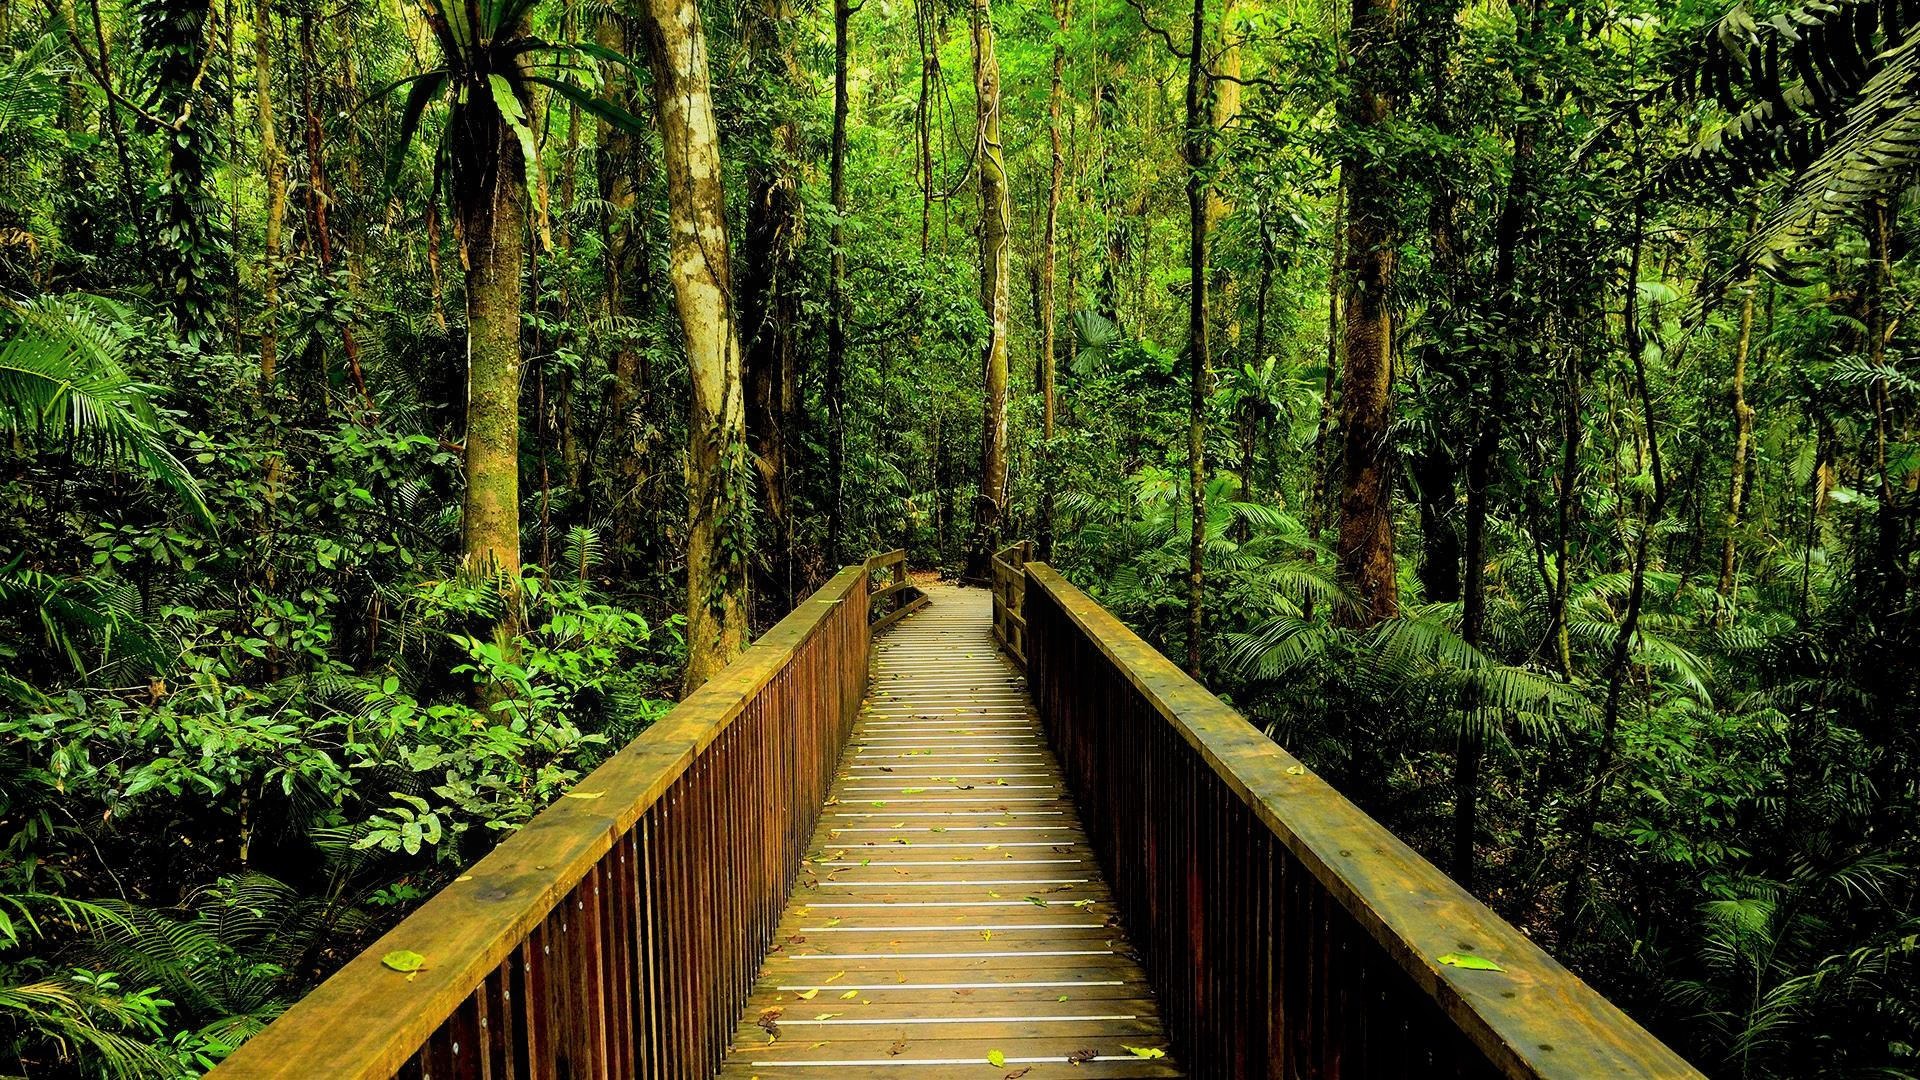 man made, bridge, forest, green, jungle, rainforest, wooden, bridges Image for desktop